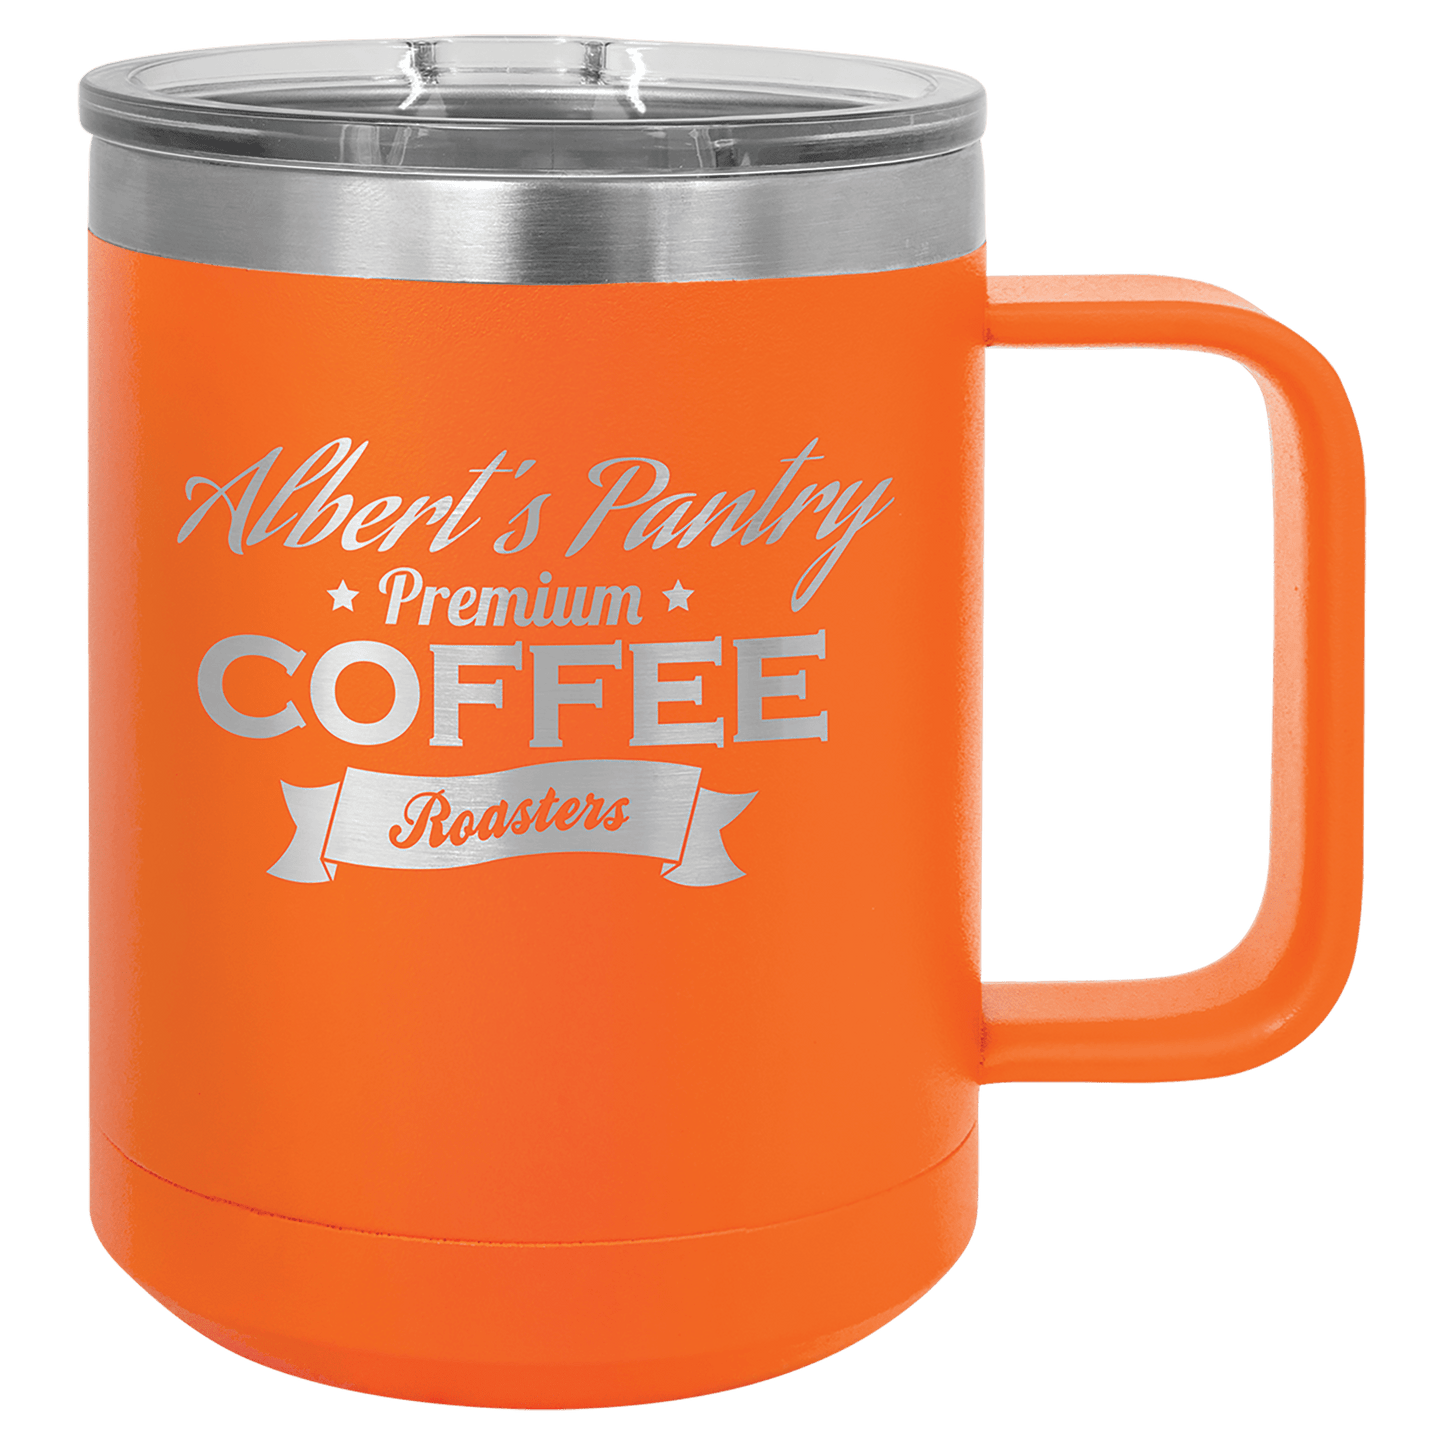 15oz. Stainless Steel Coffee Mug